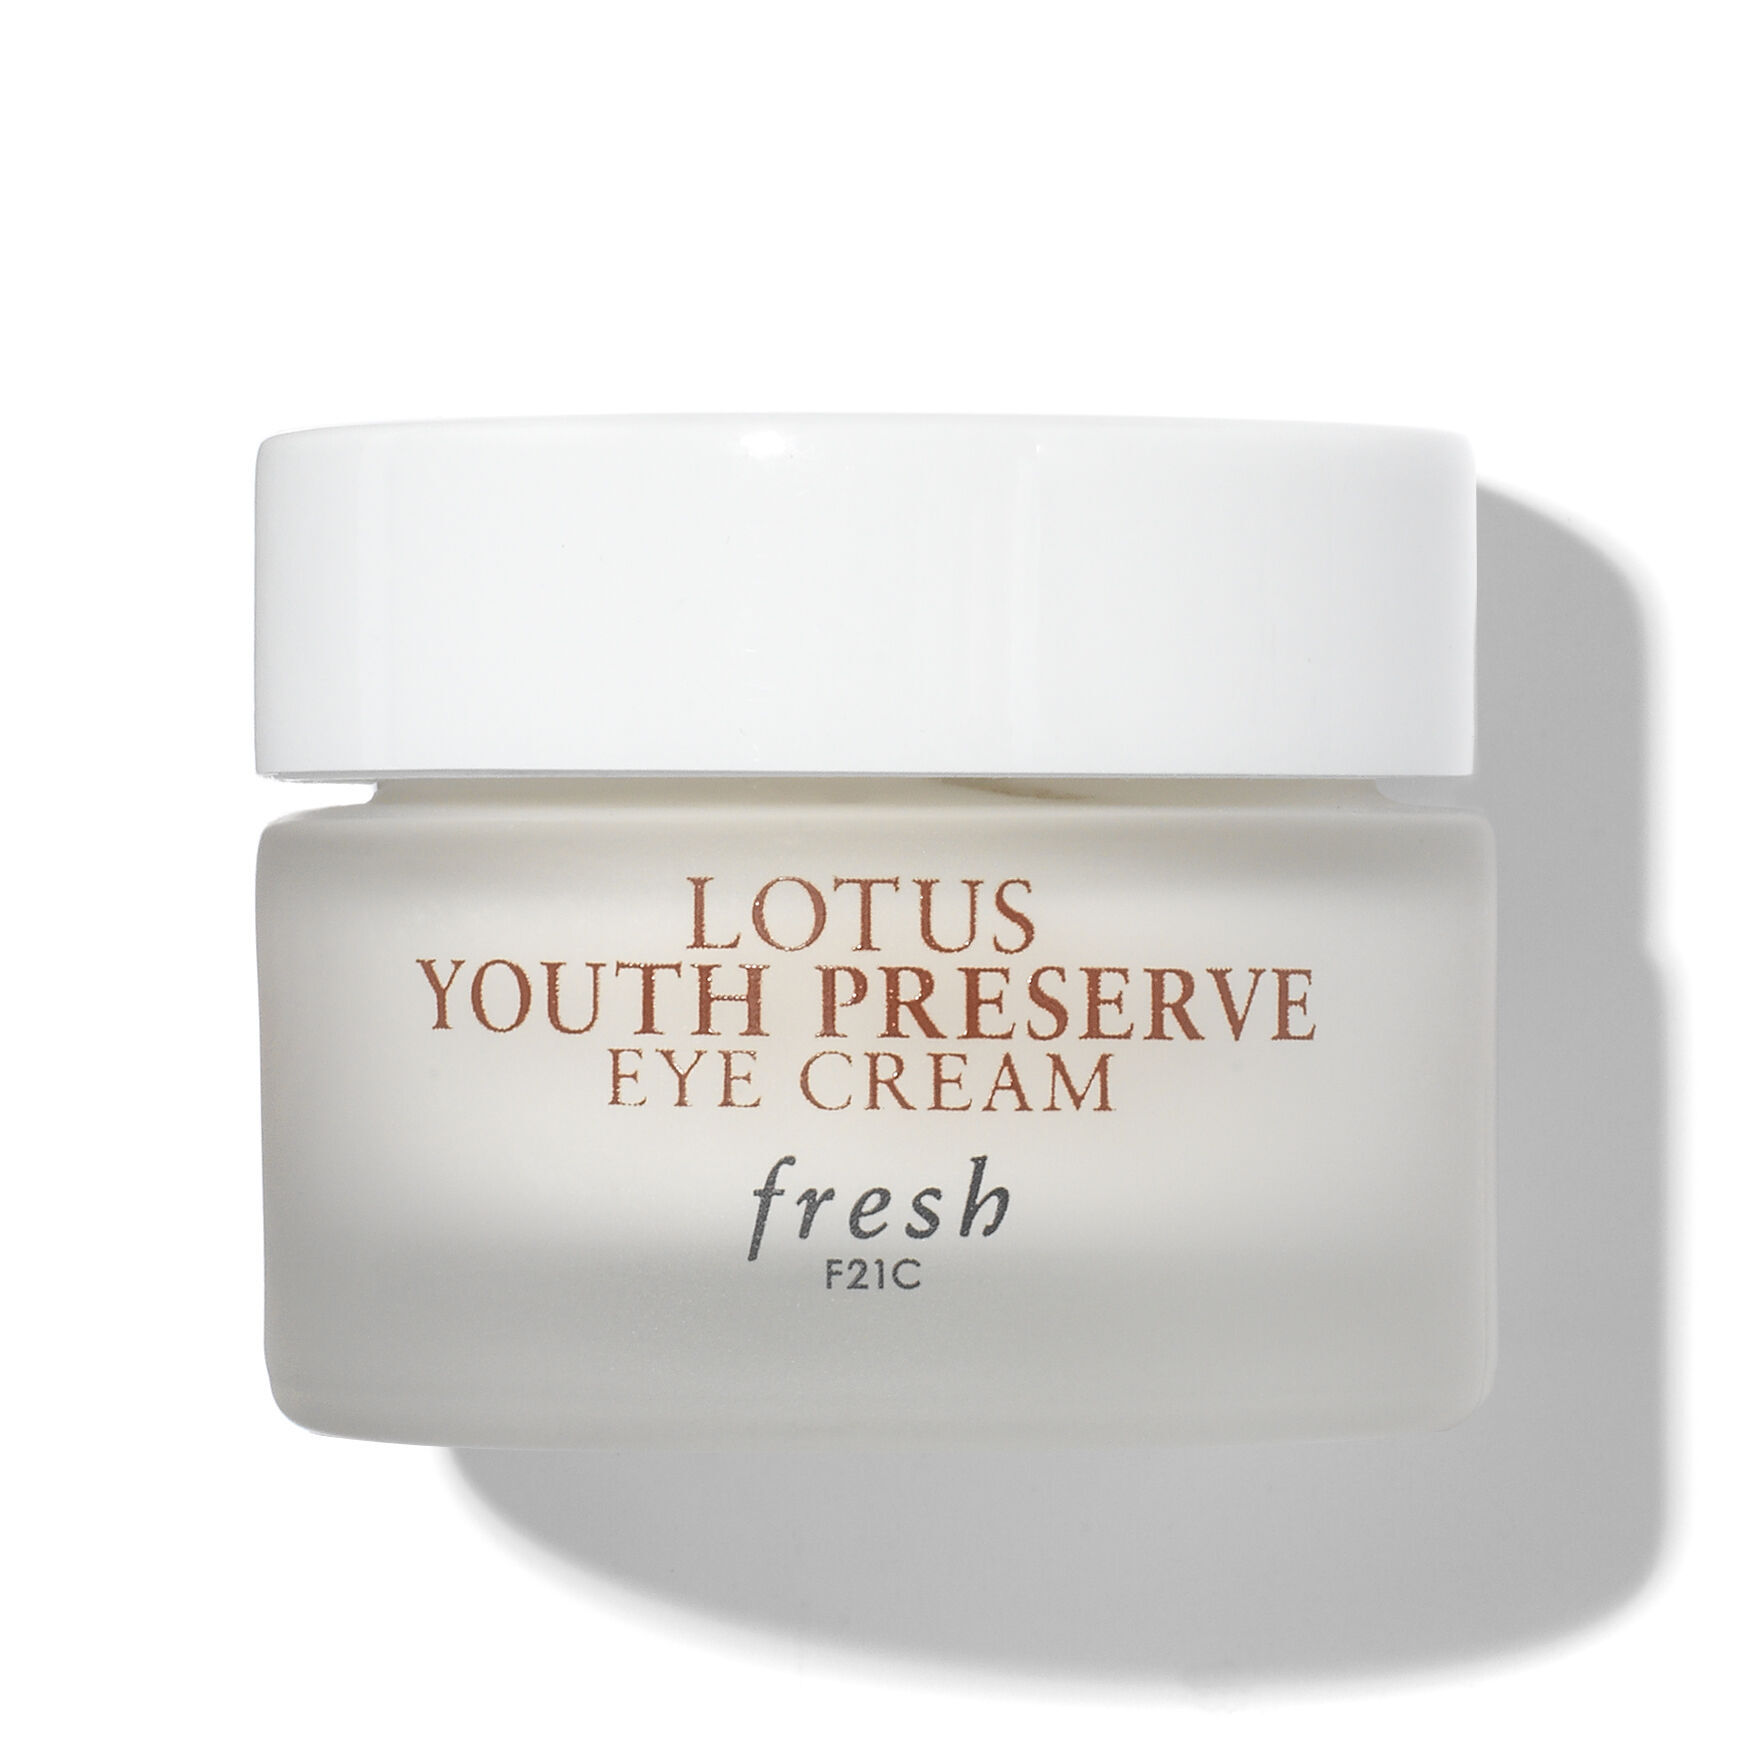 Fresh - Lotus Youth Preserve Eye Cream by Fresh